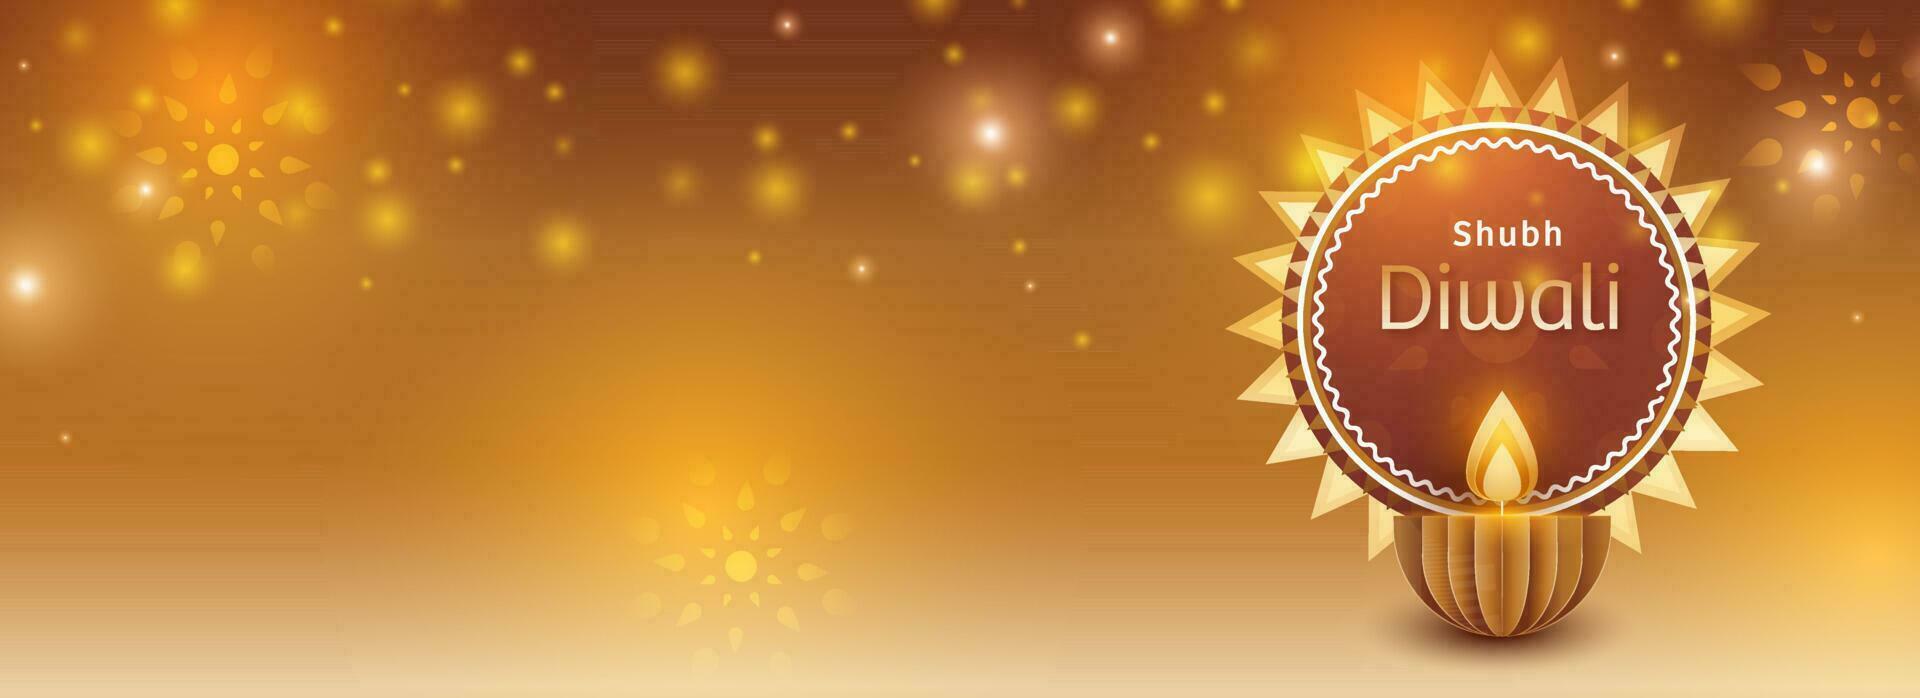 Happy Diwali Celebration Concept With Paper Cut Lit Oil Lamp On Golden Light Effect Background. vector